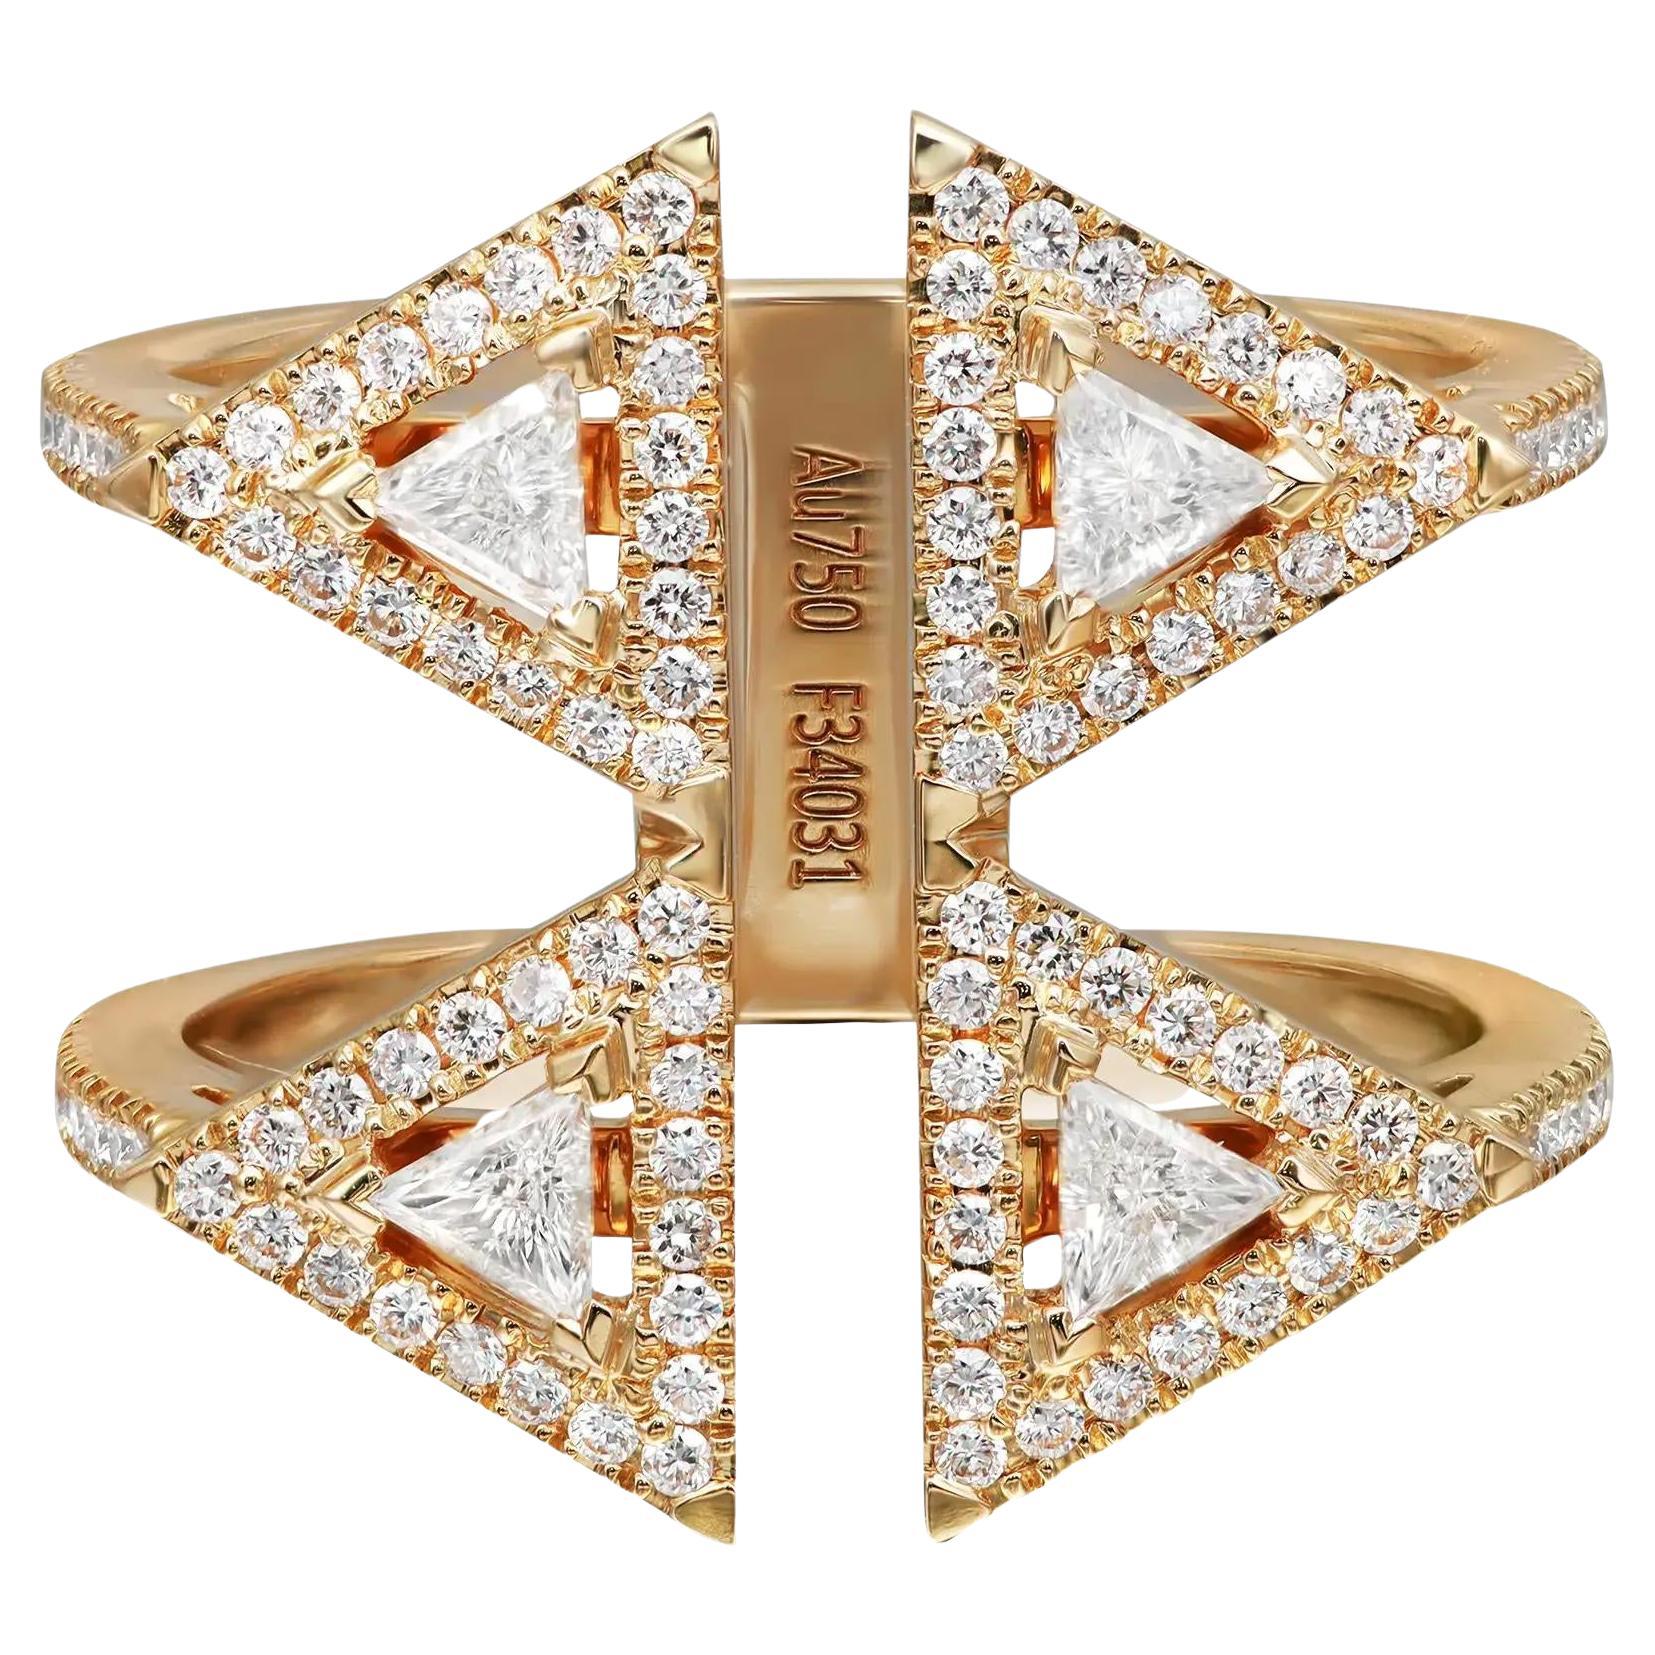 Messika Bague Thea Toi & Moi en or jaune 18 carats avec diamants 0,72 carat, taille 49 US 5